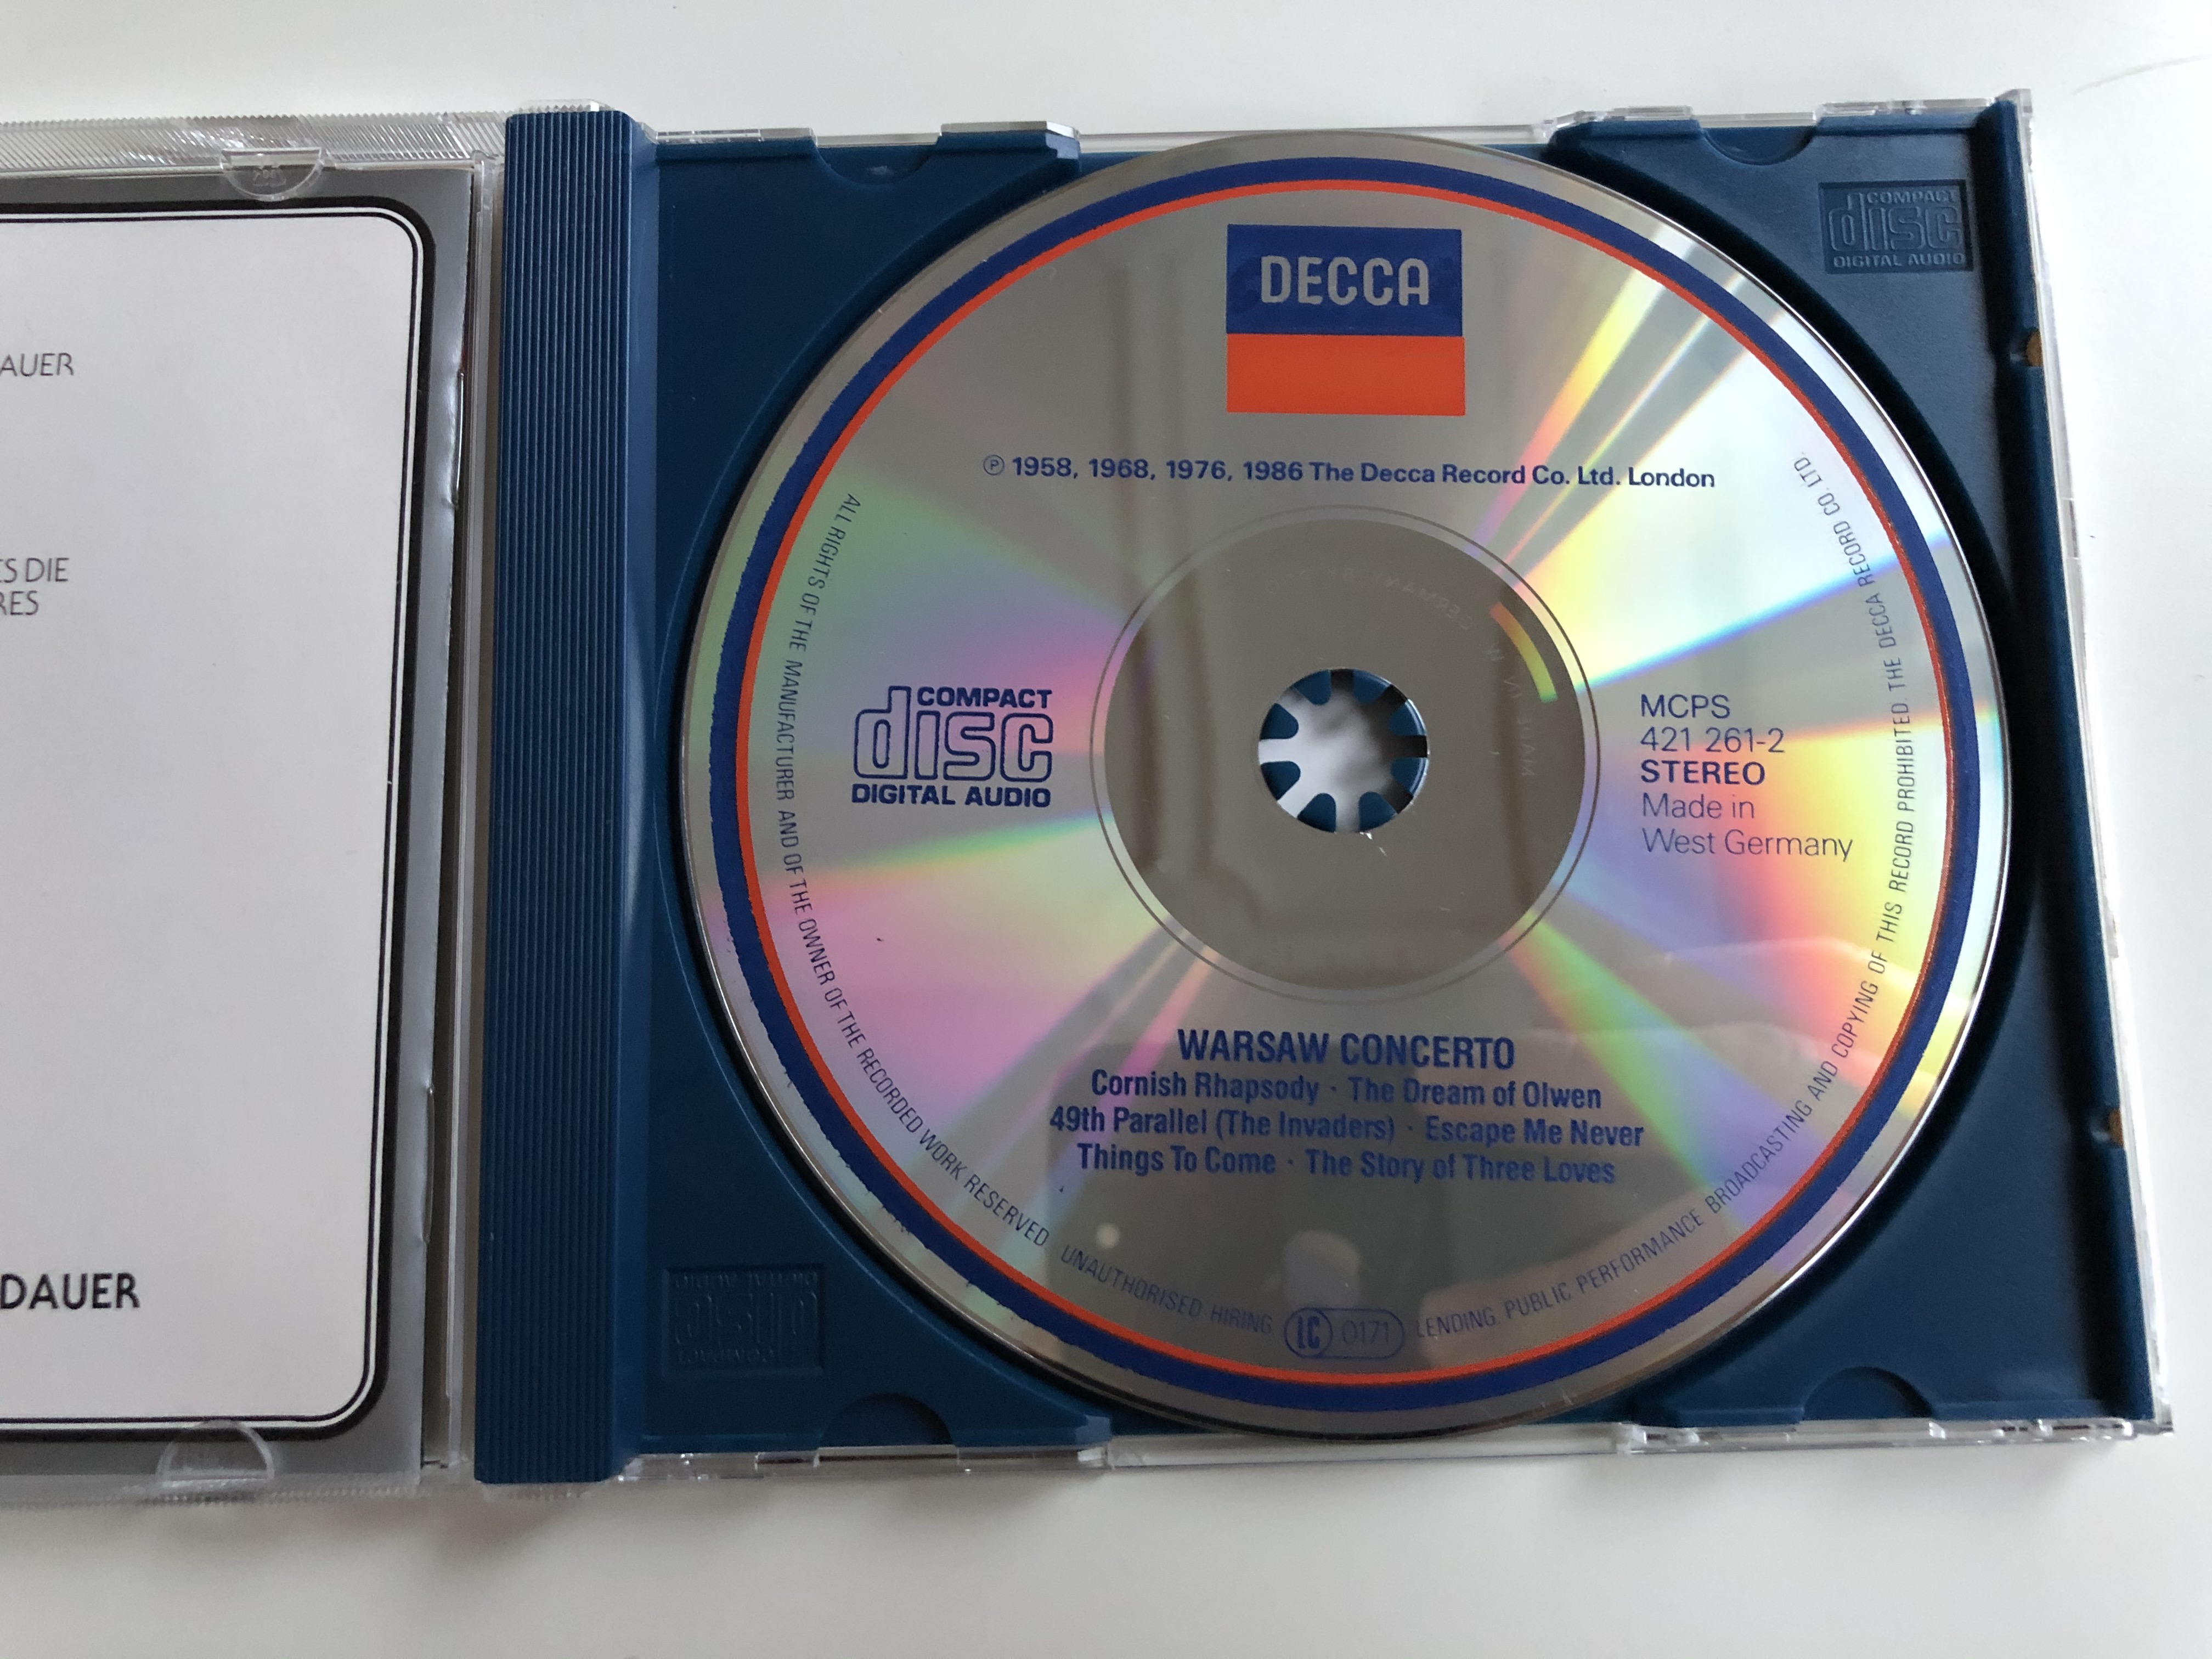 warsaw-concerto-le-concerto-de-varsovie-warschauer-konzert-cornish-rhapsody-the-dream-of-olwen-things-to-come-cinema-gala-decca-audio-cd-1988-stereo-421-261-2-7-.jpg